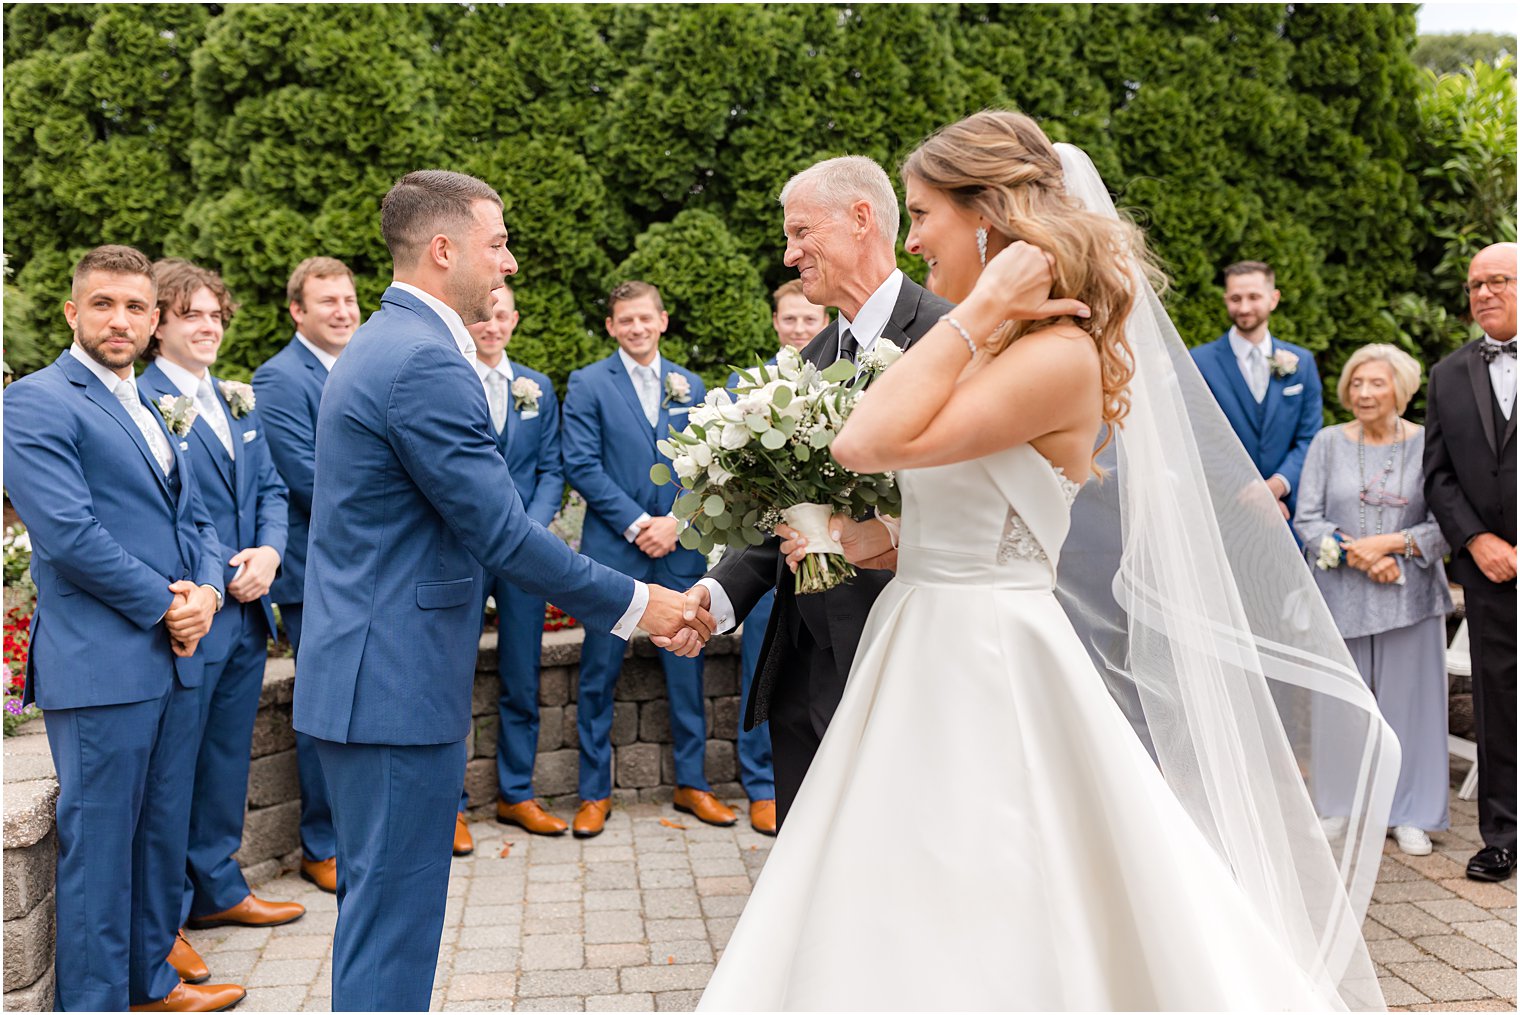 dad gives bride away during Spring Lake NJ wedding ceremony